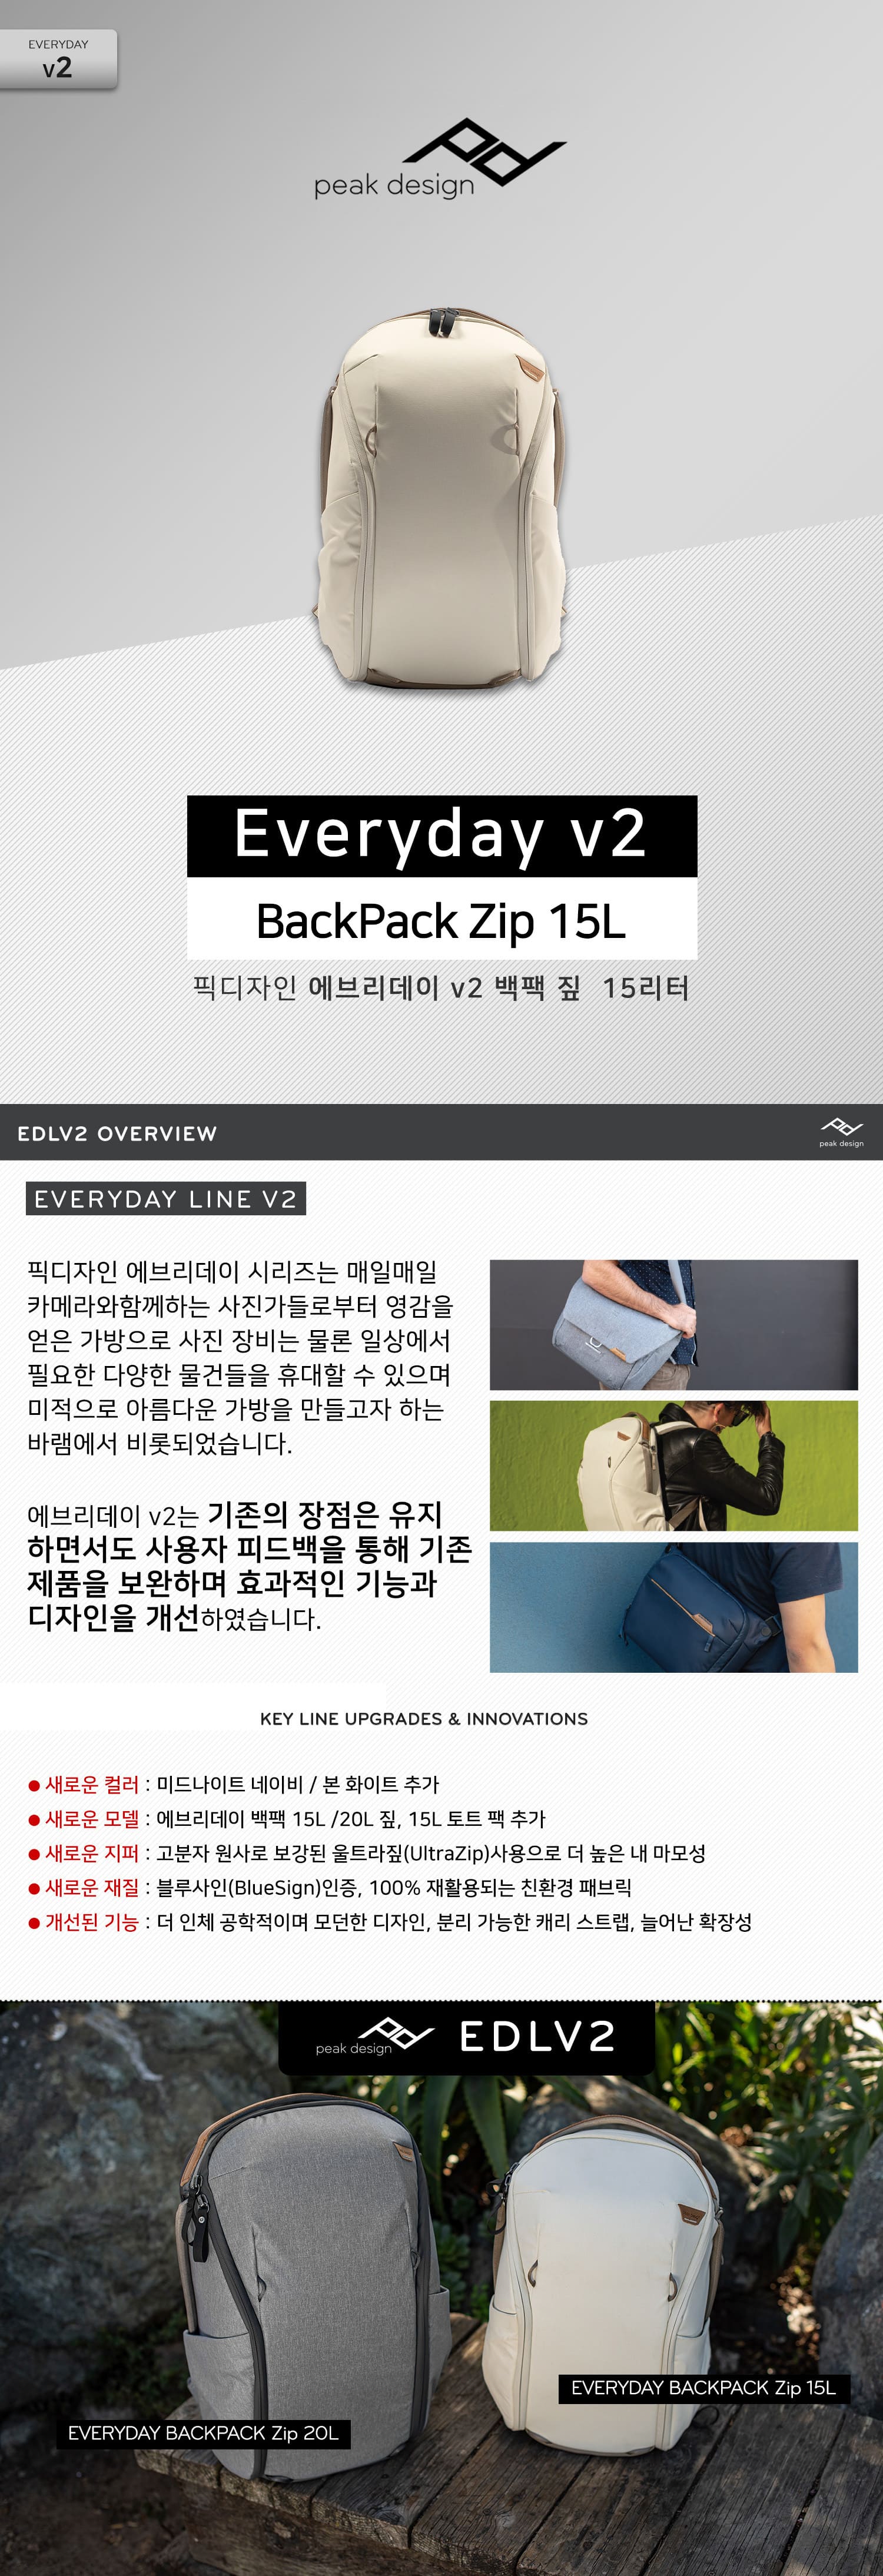 peak design Everyday v2 Backpack Zip 15L Bone   긮 v2  ¤ 15L  ̺